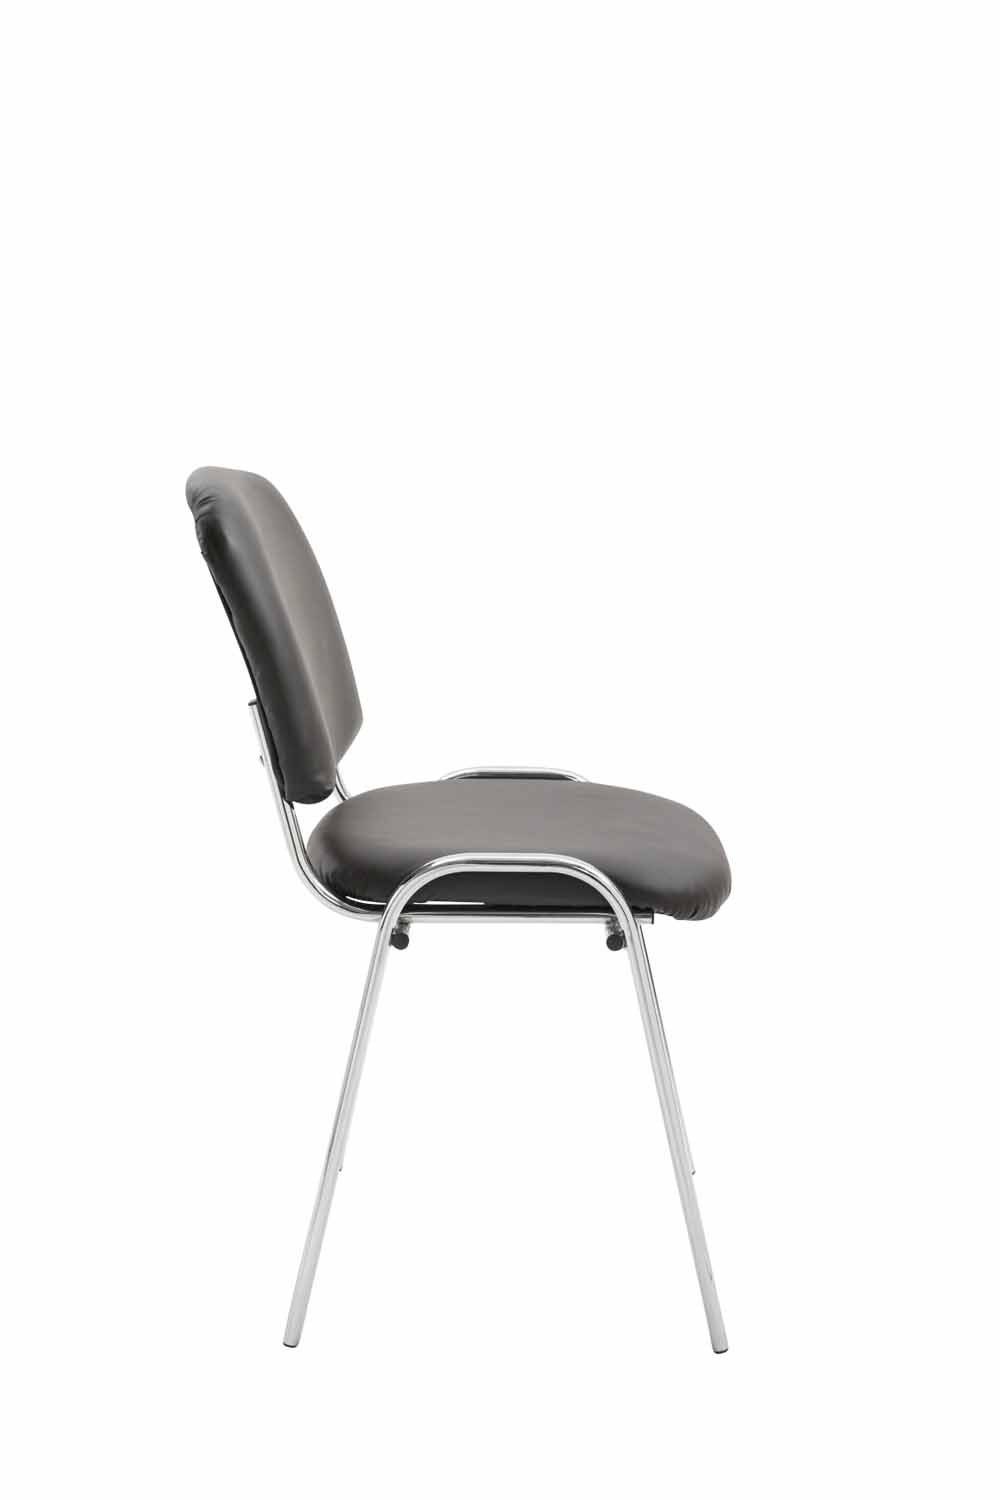 TPFLiving Gestell: hochwertiger mit Messestuhl), - Konferenzstuhl braun Warteraumstuhl Kunstleder Metall Besucherstuhl (Besprechungsstuhl - chrom Sitzfläche: - - Polsterung Keen